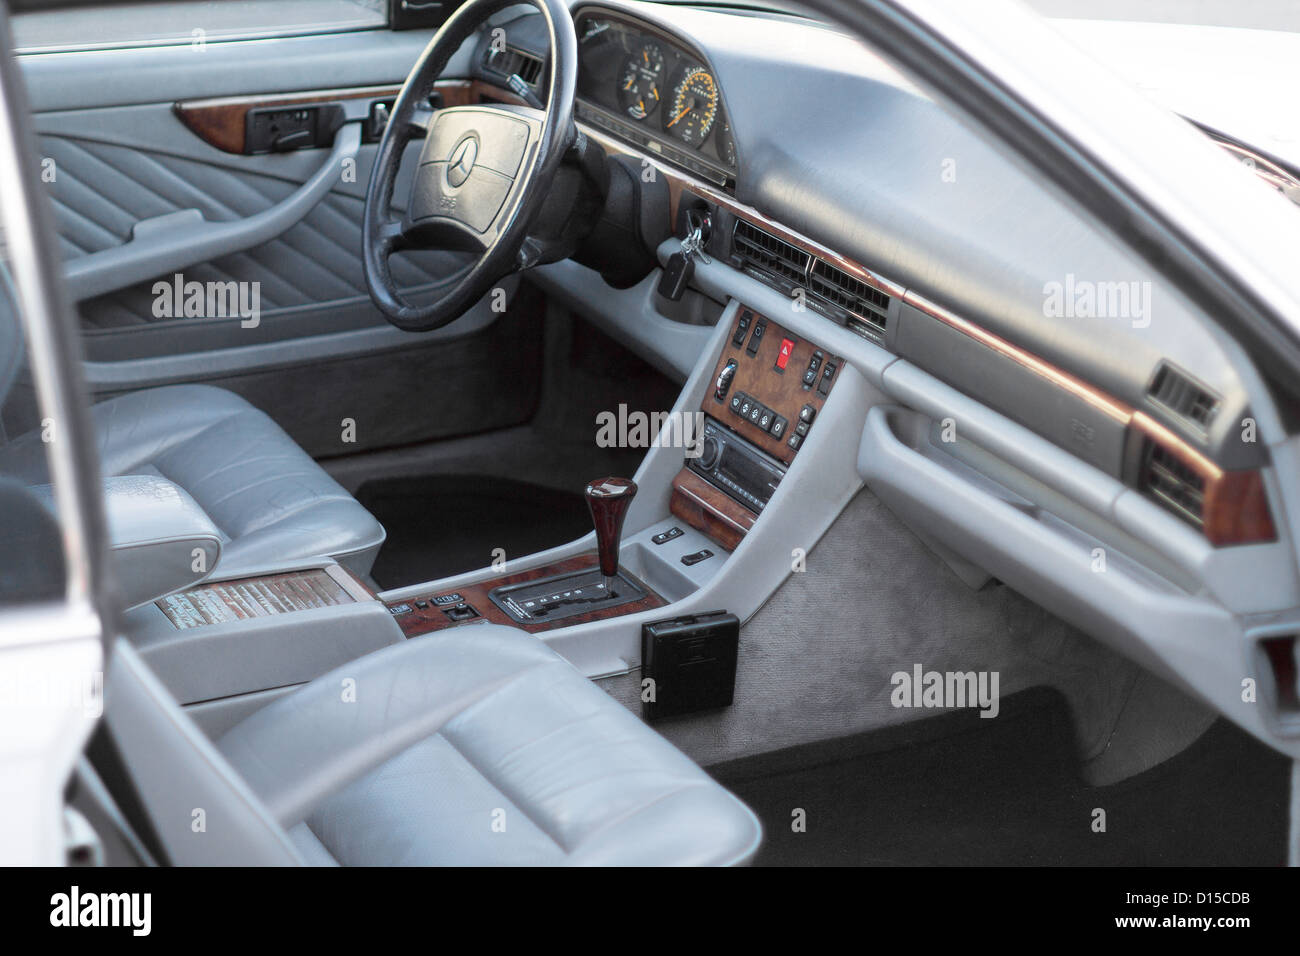 Mercedes 560 Sec Interior In Grey Leather Stock Photo